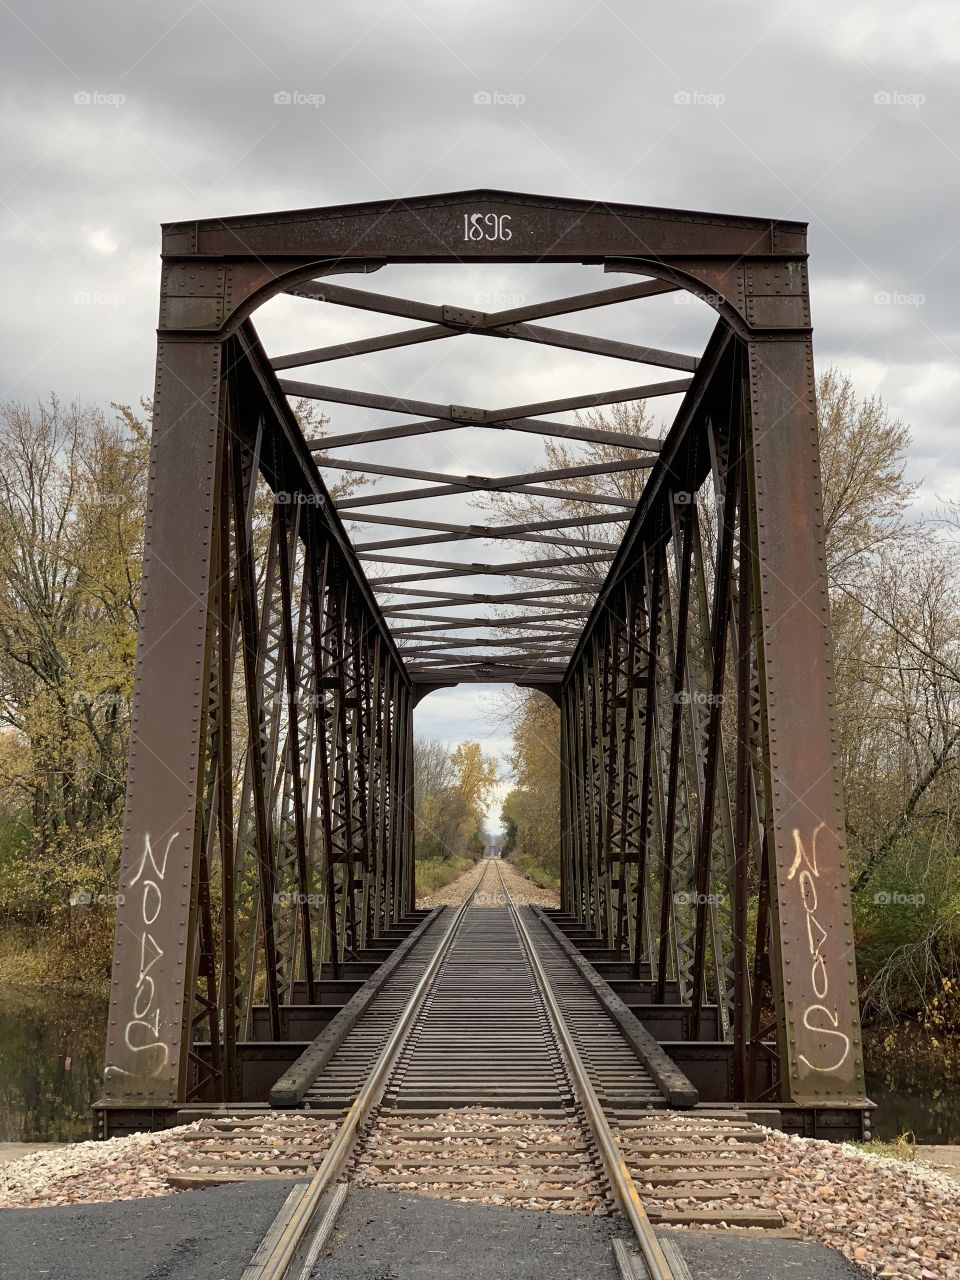 Train track bridge 